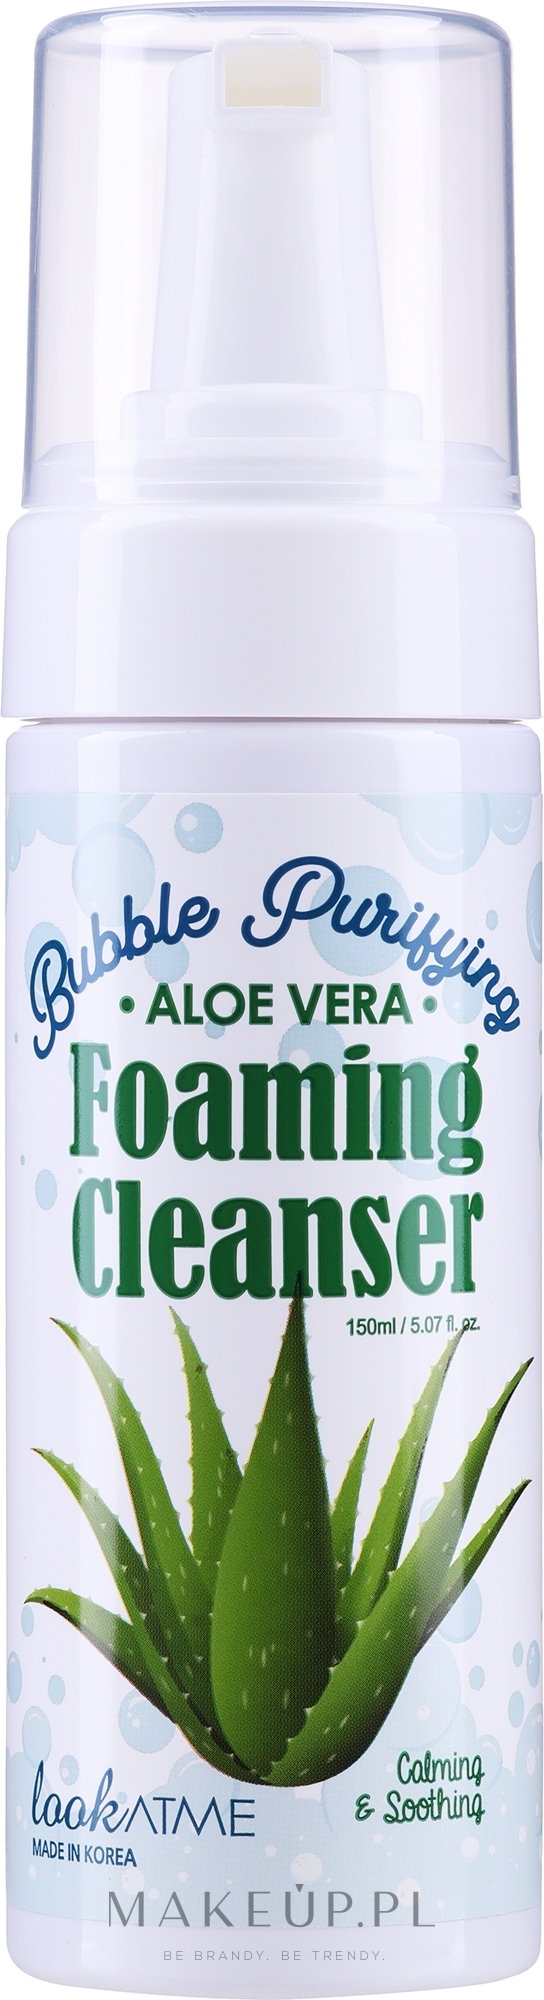 Pianka do mycia twarzy z ekstraktem z aloesu - Look At Me Bubble Purifying Foaming Facial Cleanser Aloe Vera — Zdjęcie 150 ml